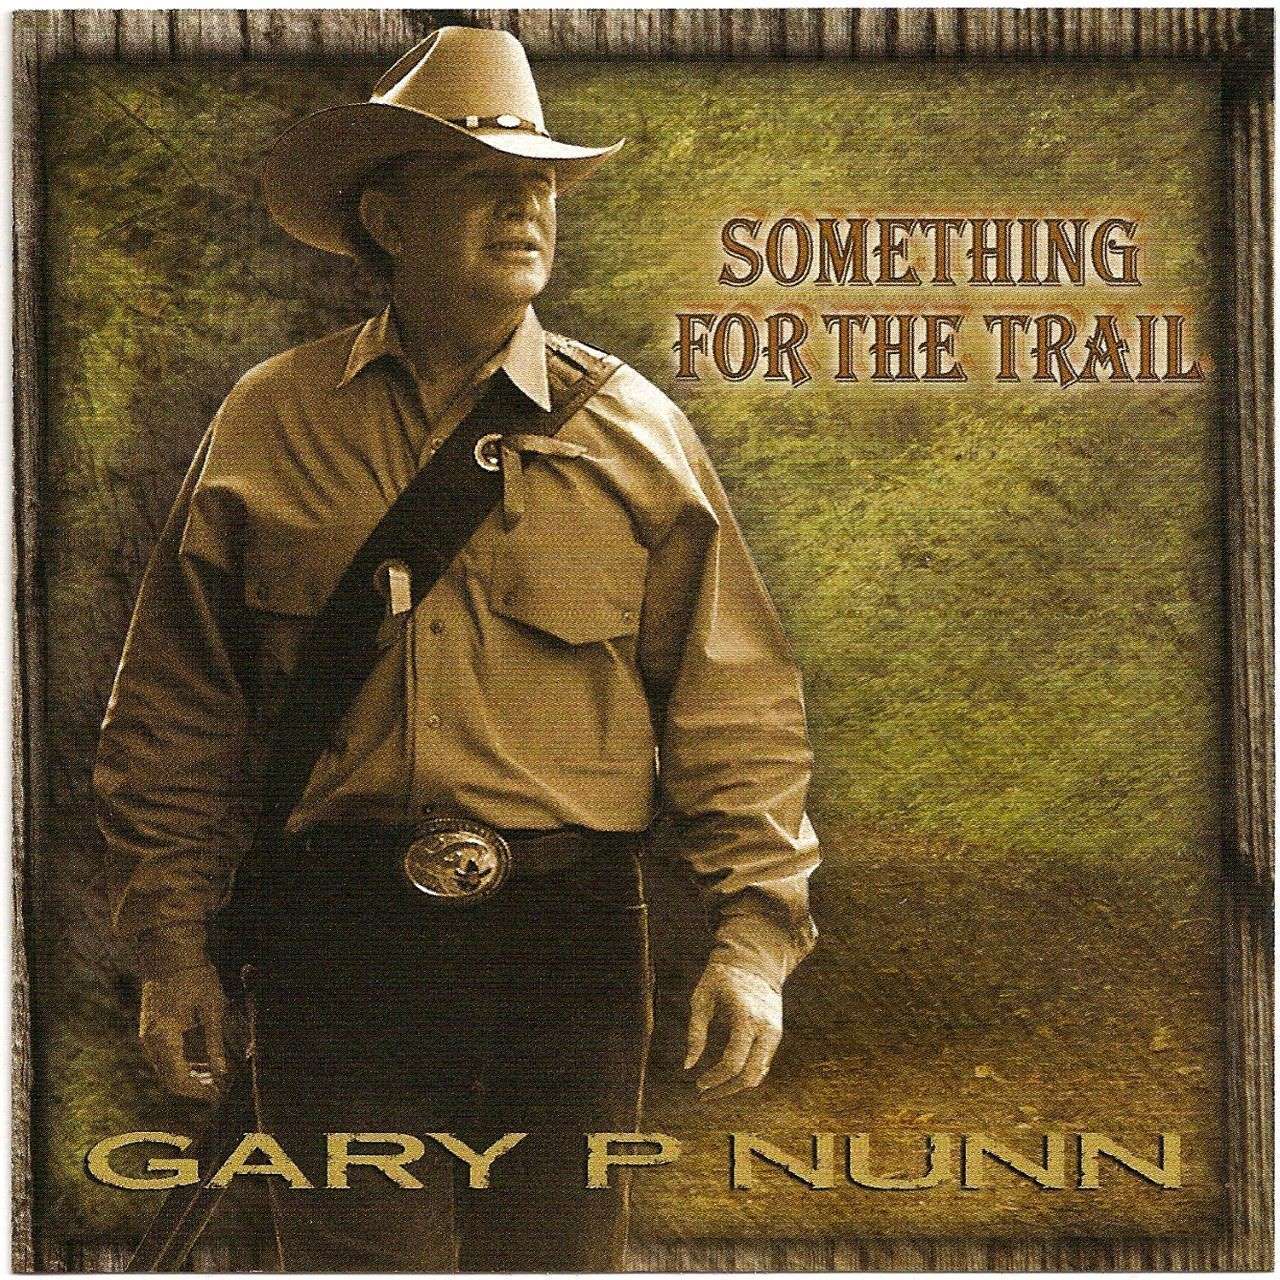 Gary P. Nunn - Something For The Trail cover album